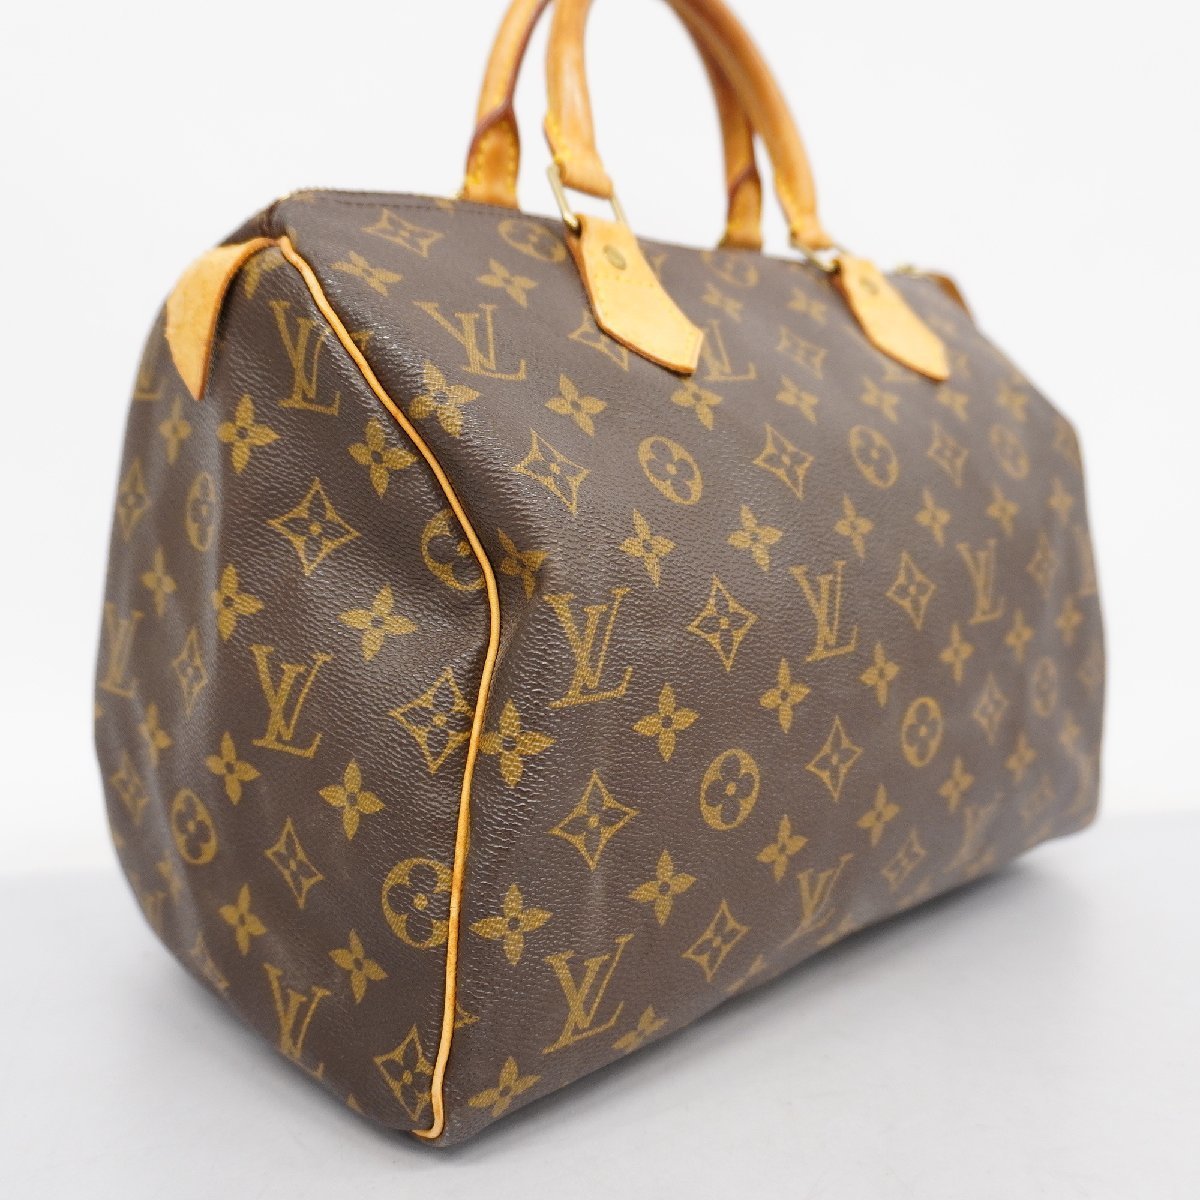 Louis Vuitton Monogram Speedy 30 Handbag M41108